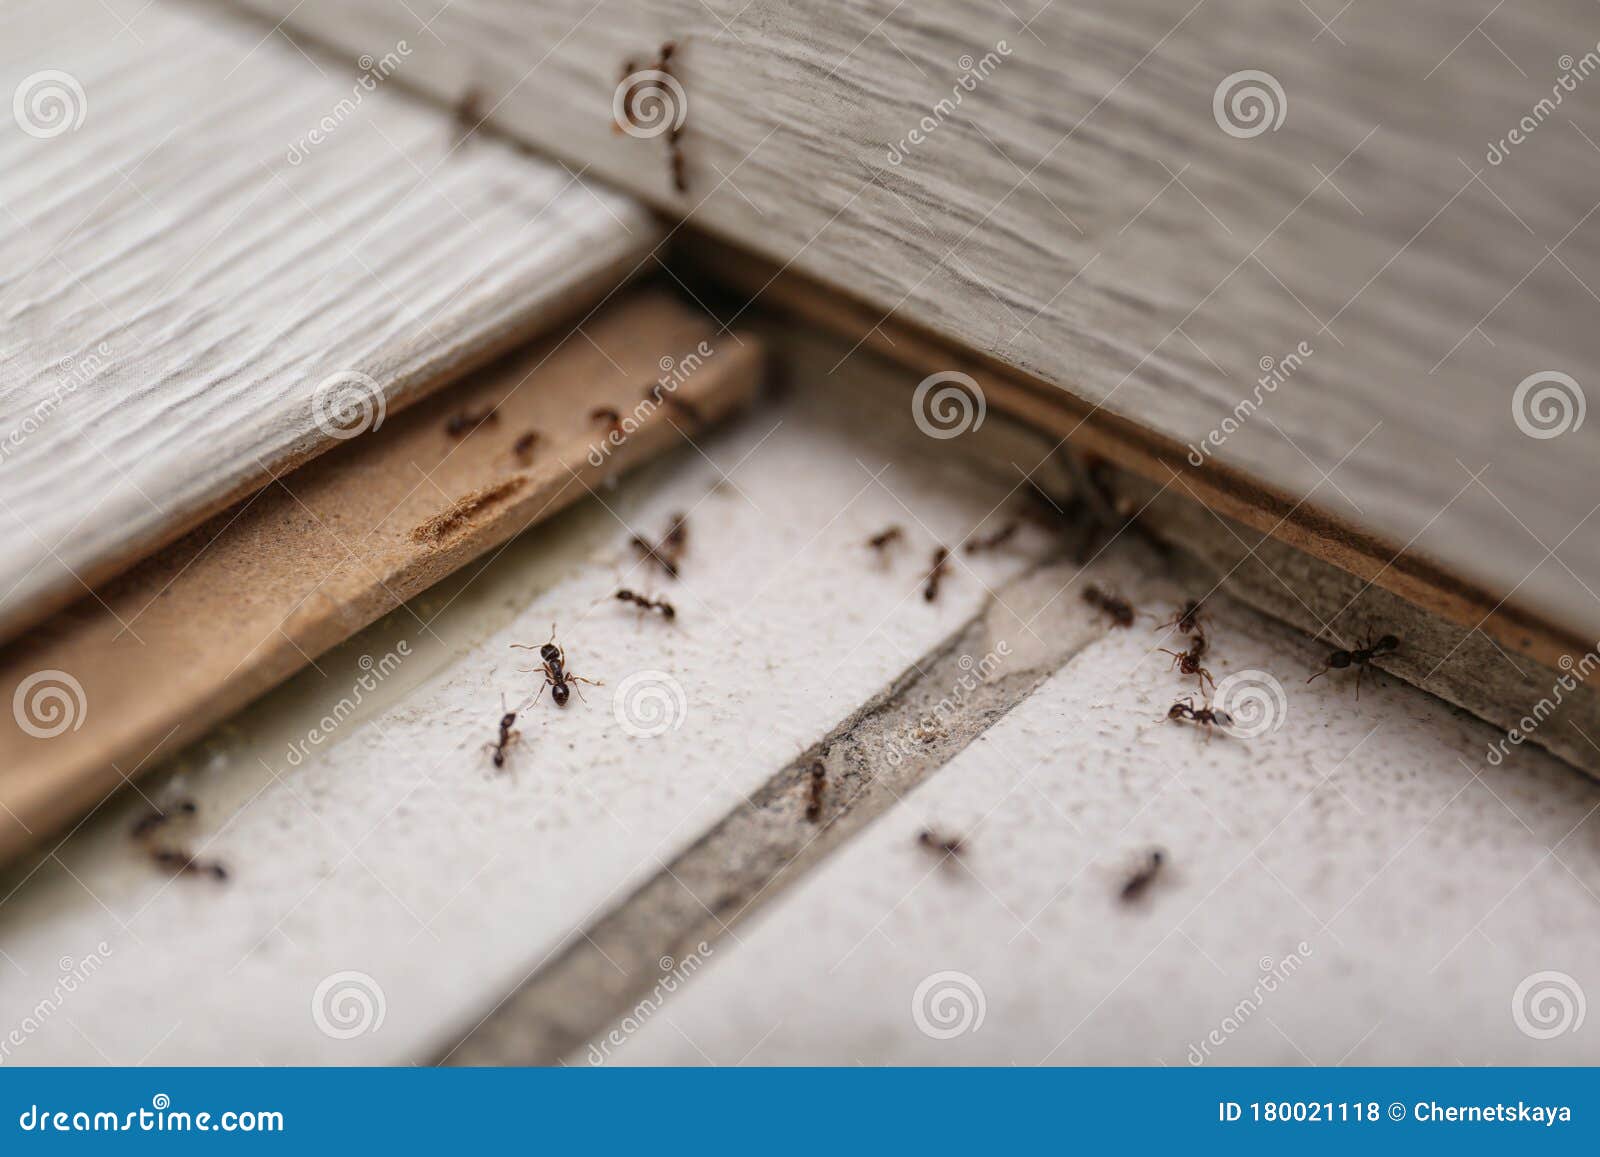 many black ants on floor. pest control